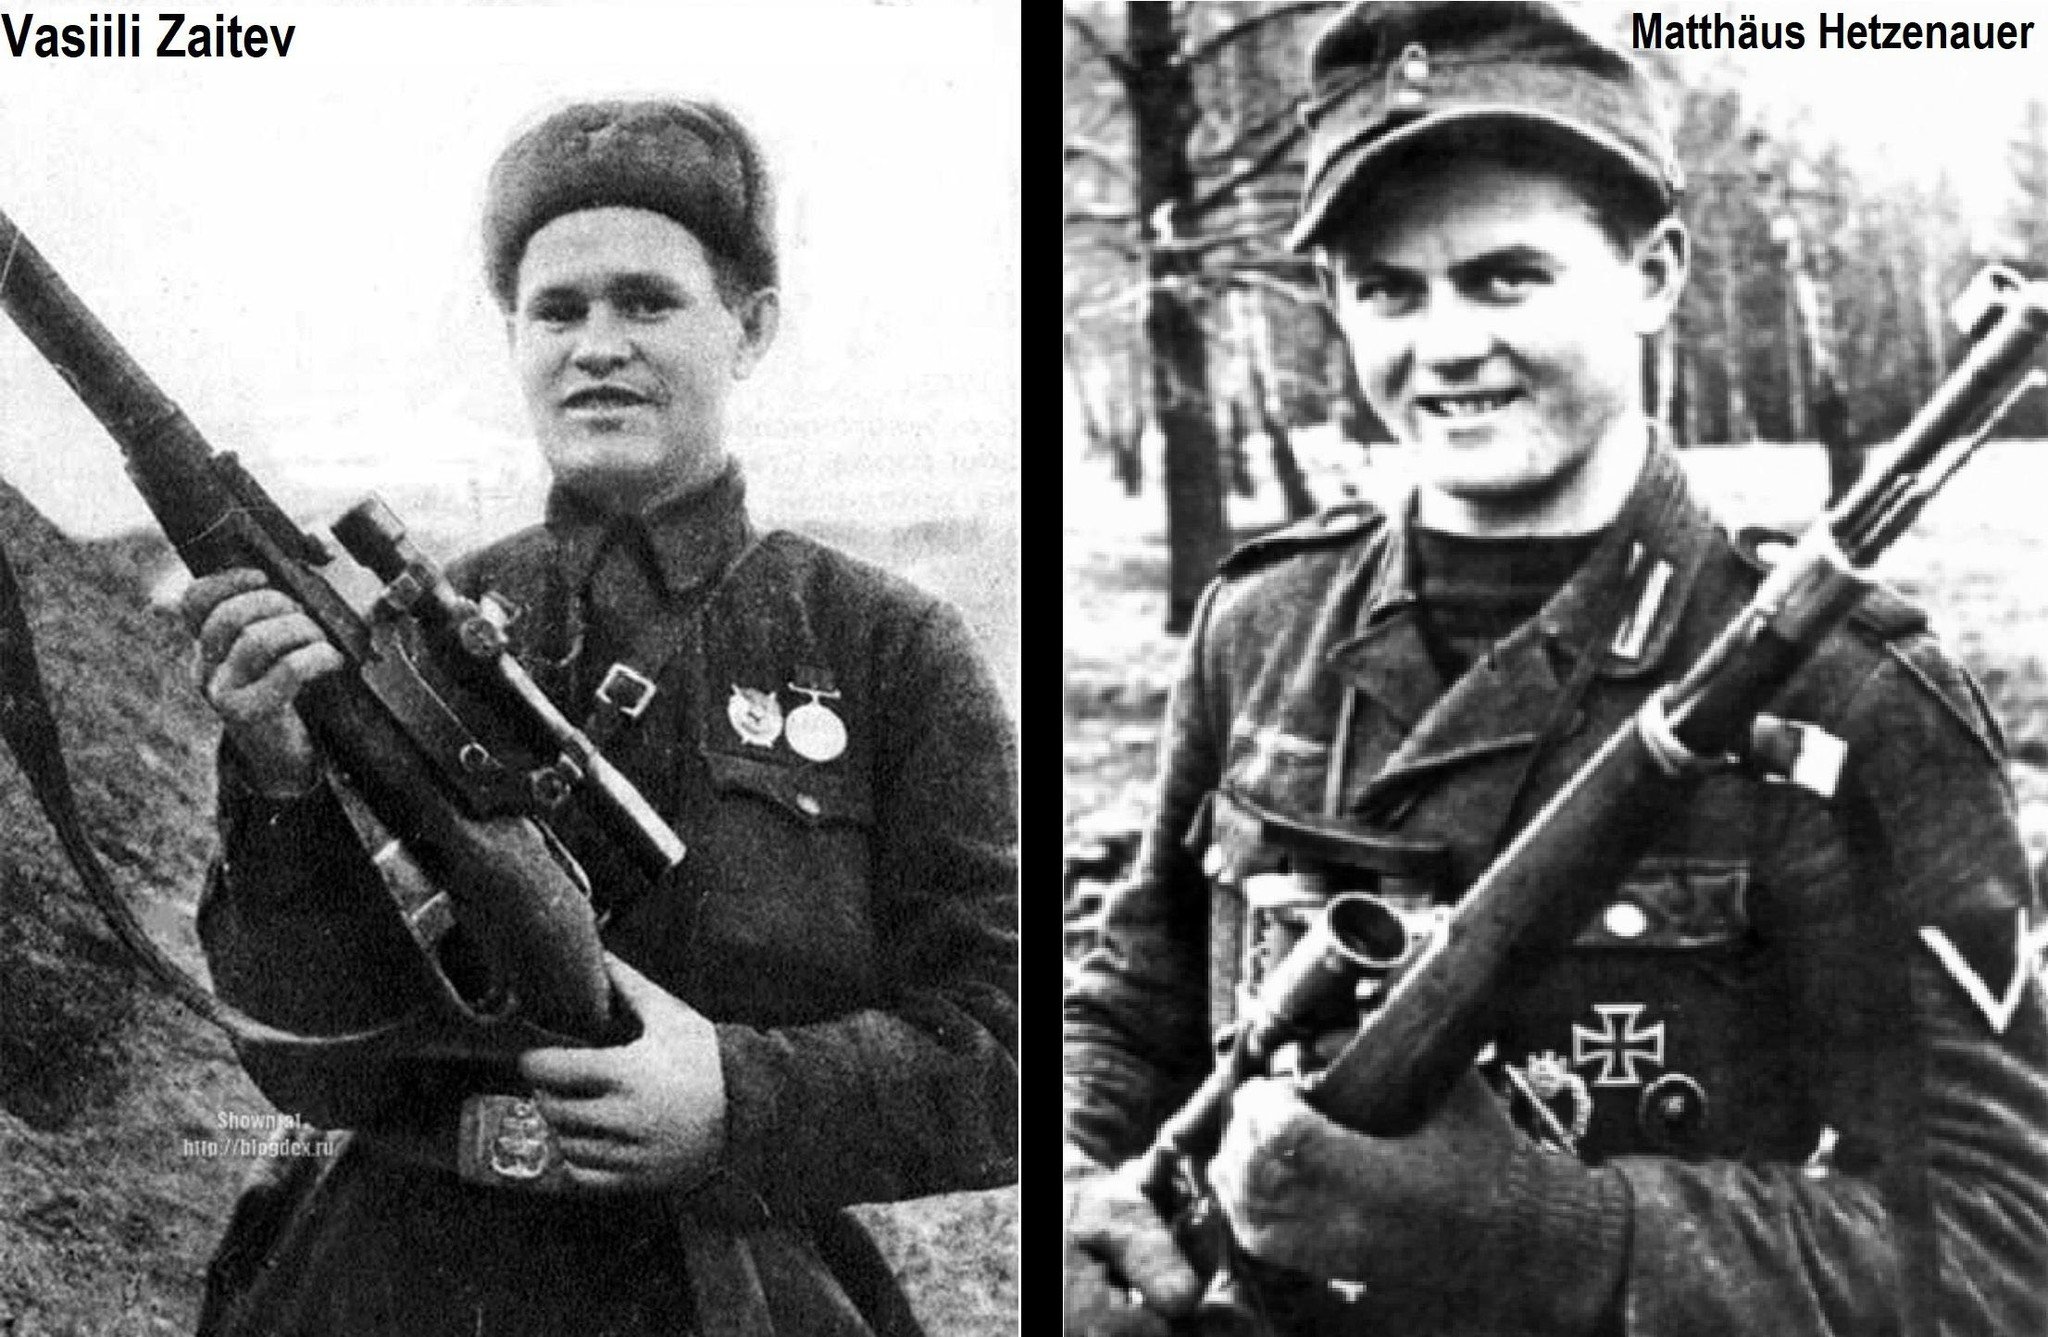 WW2 Sniper aces, Vasilli Zaitsev (Russian, Left) and Matthäus Hetzenauer (Austrian, Right)